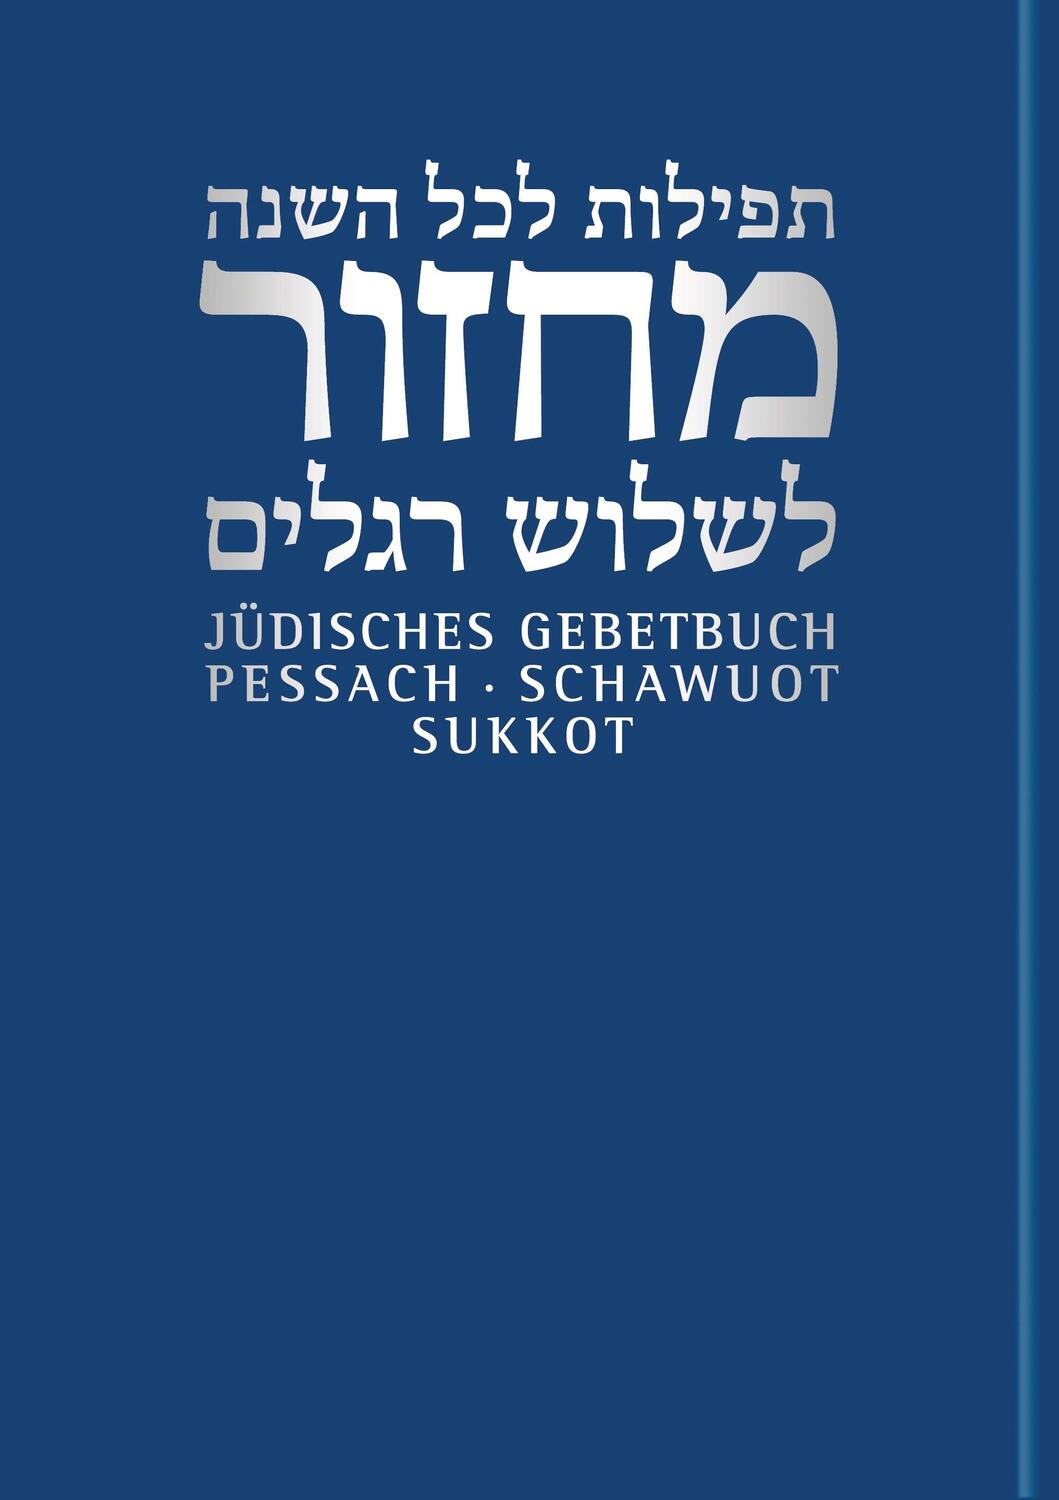 Jüdisches Gebetbuch Hebräisch-Deutsch 02. Pessach/Schawuot/Sukkot - Nachama, Andreas